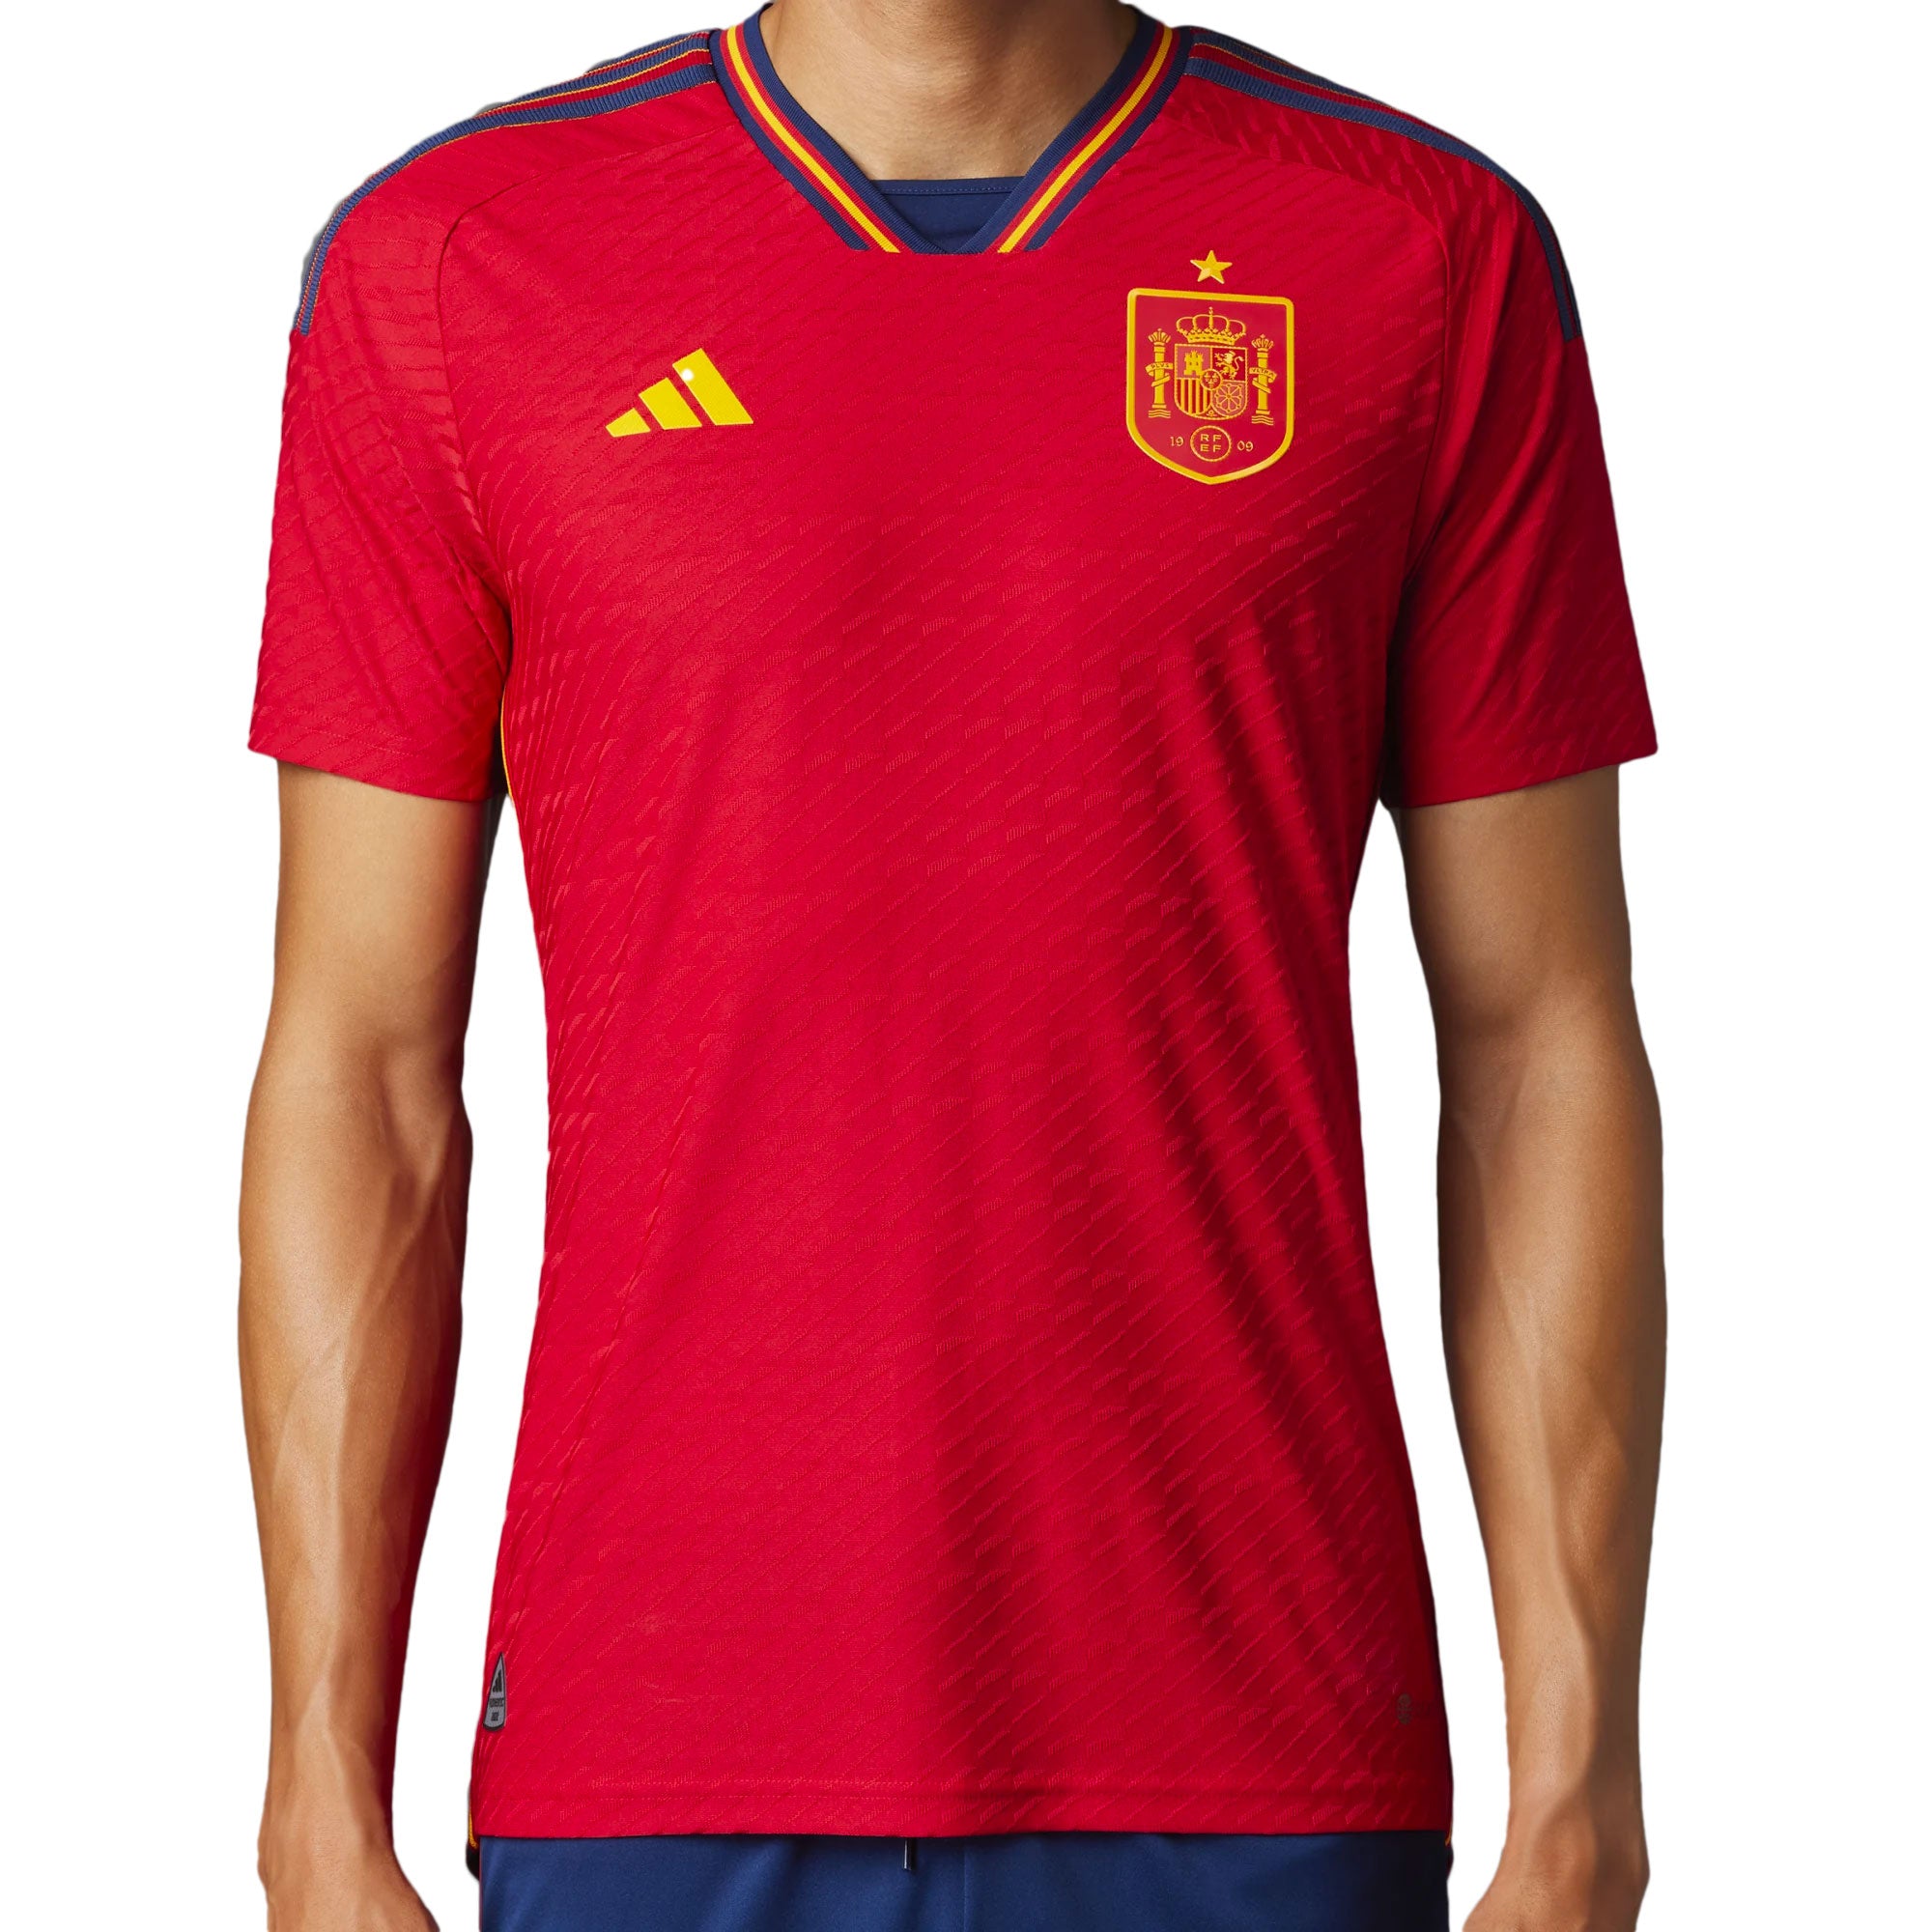 Adidas Spain 2012 Away Kit Soccer T-Shirt Jersey Men’s Size Small